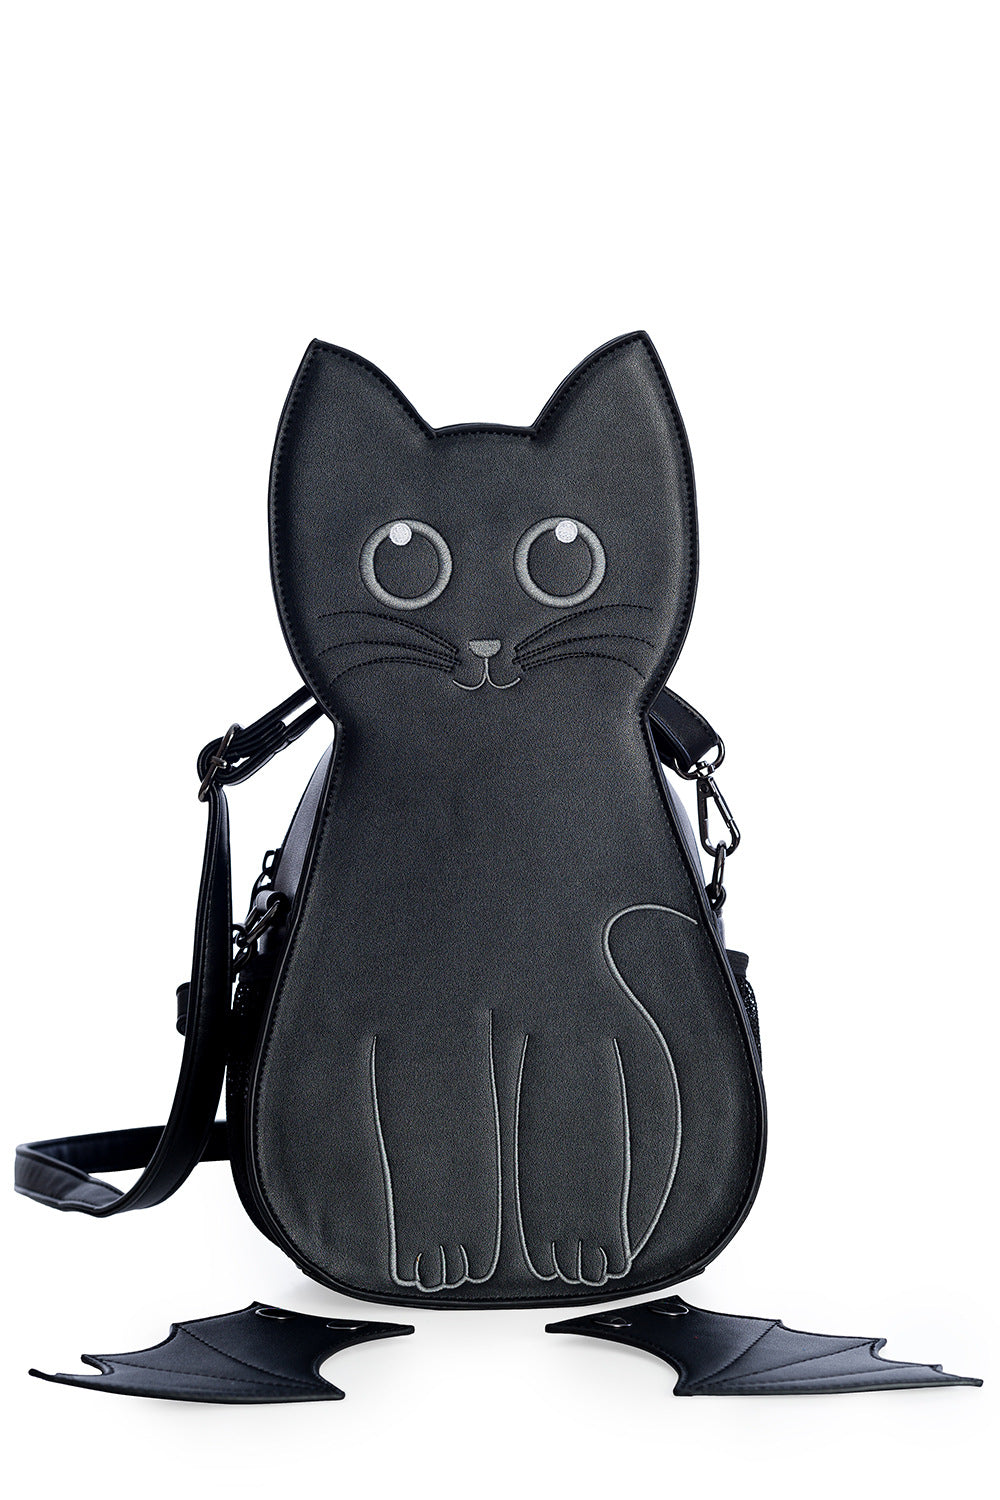 Lost Queen Women's Wendigo Bag Convertible Backpack Cute Black Cat Bat